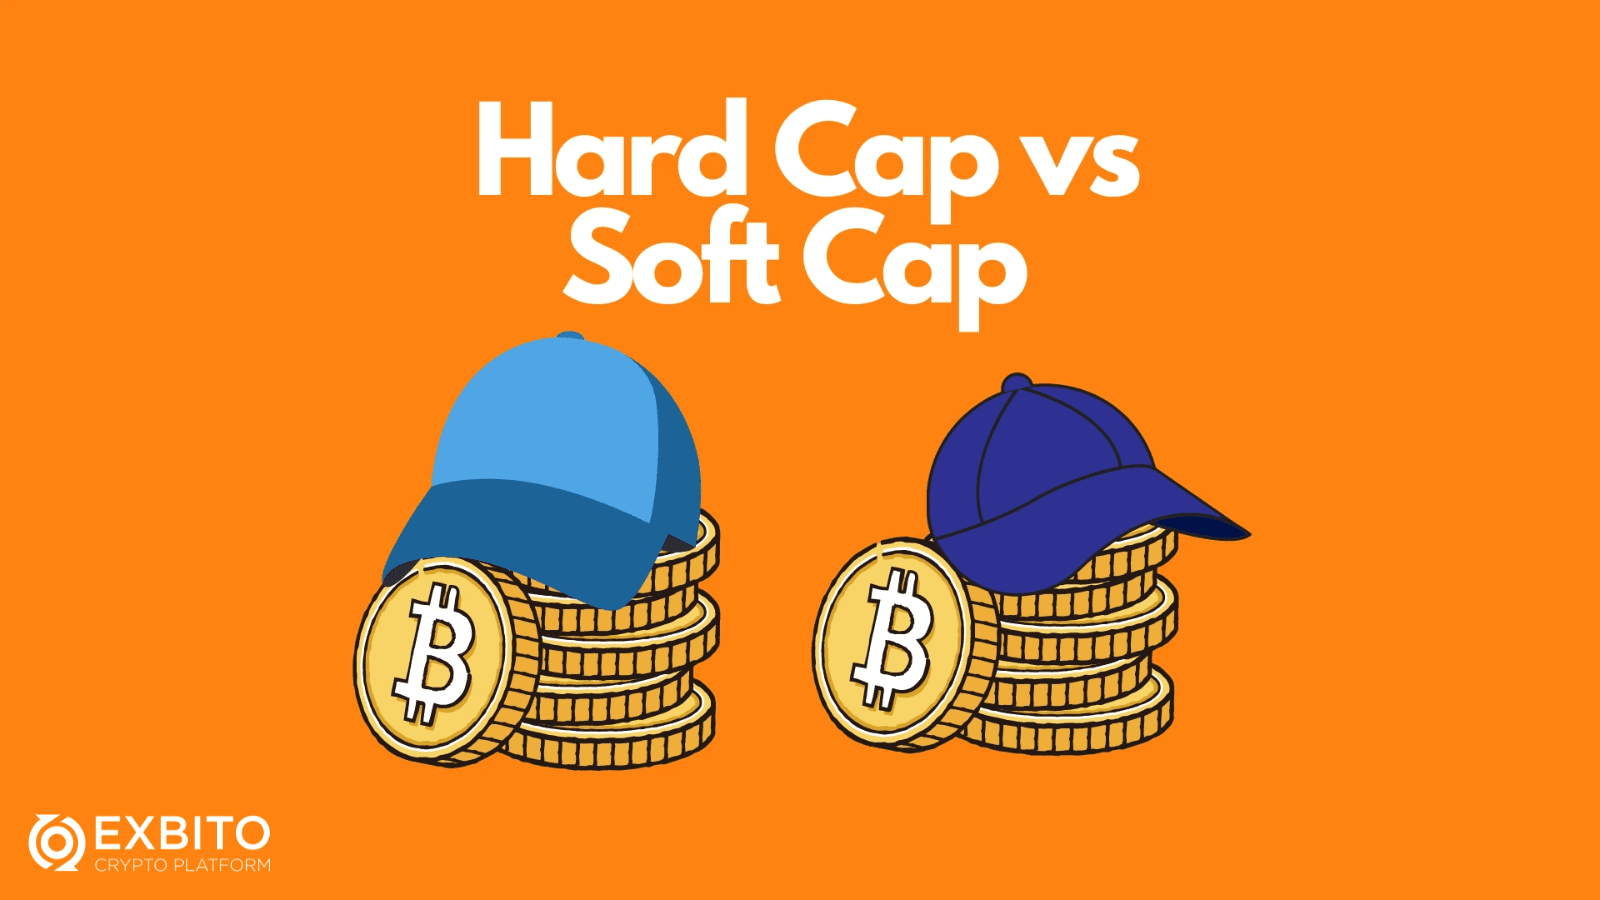 هارد کپ (Hard Cap) چیست و چه تفاوتی با سافت کپ (Soft Cap) د